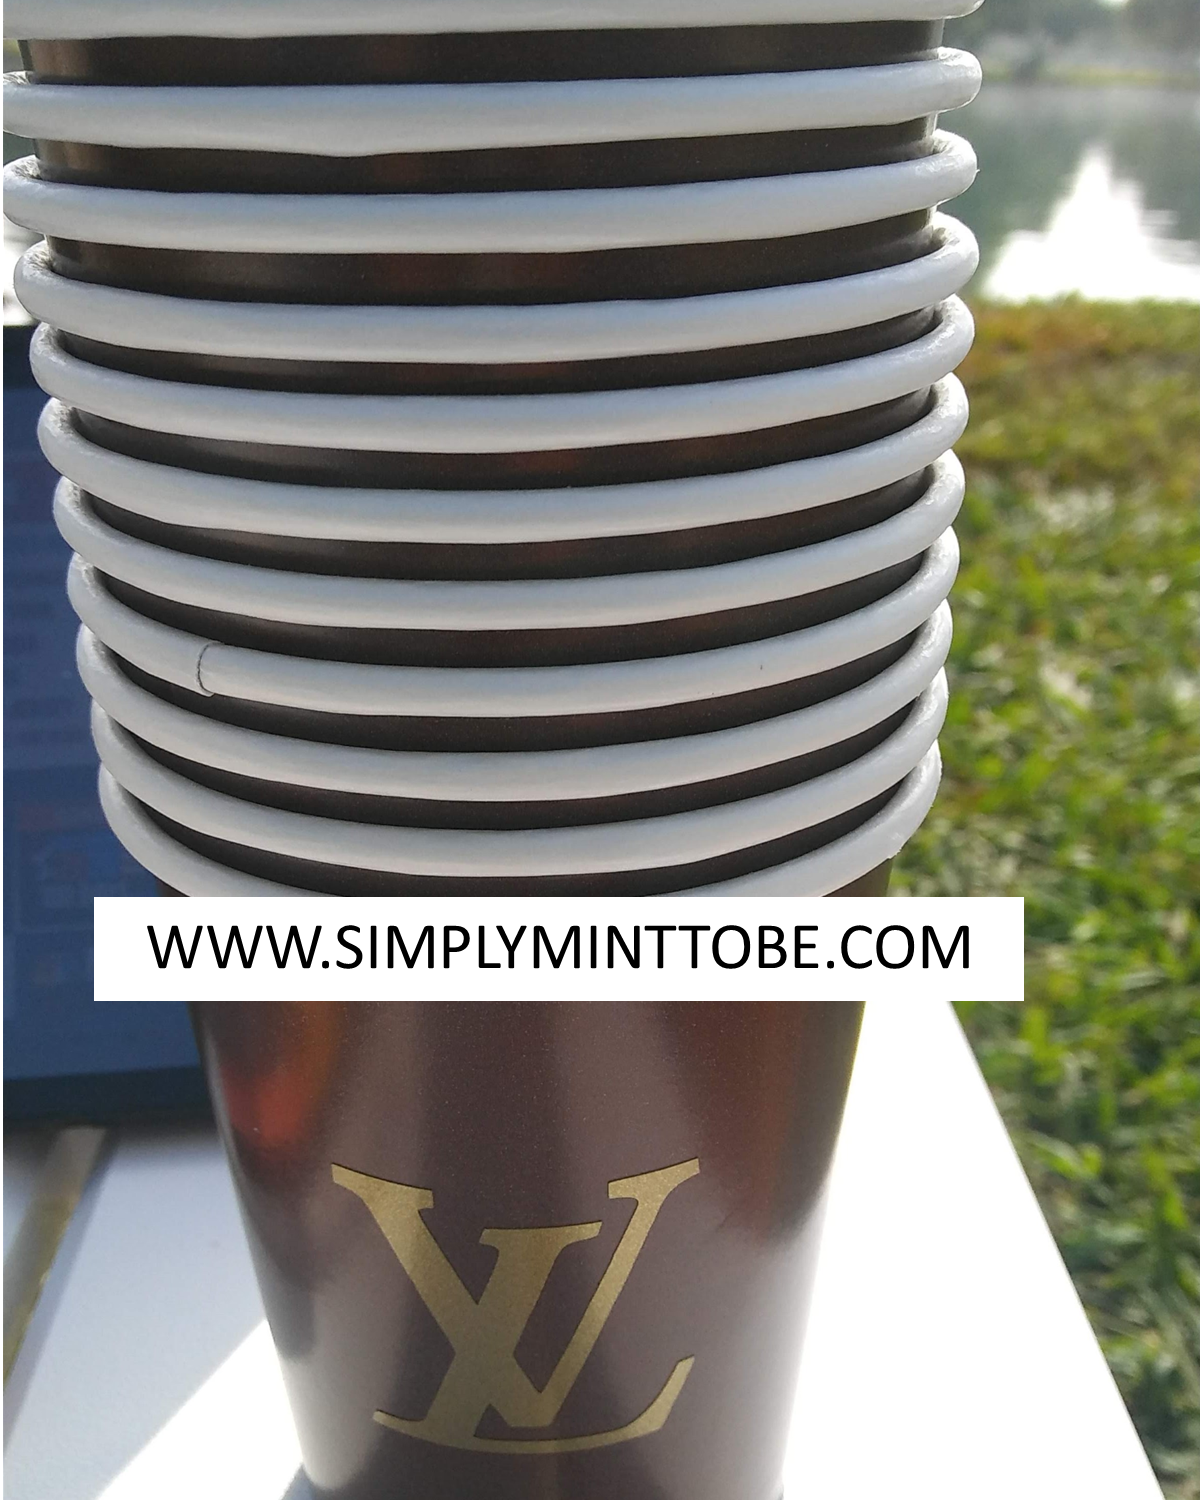 Louis Vuitton Inspired Styrofoam Cup